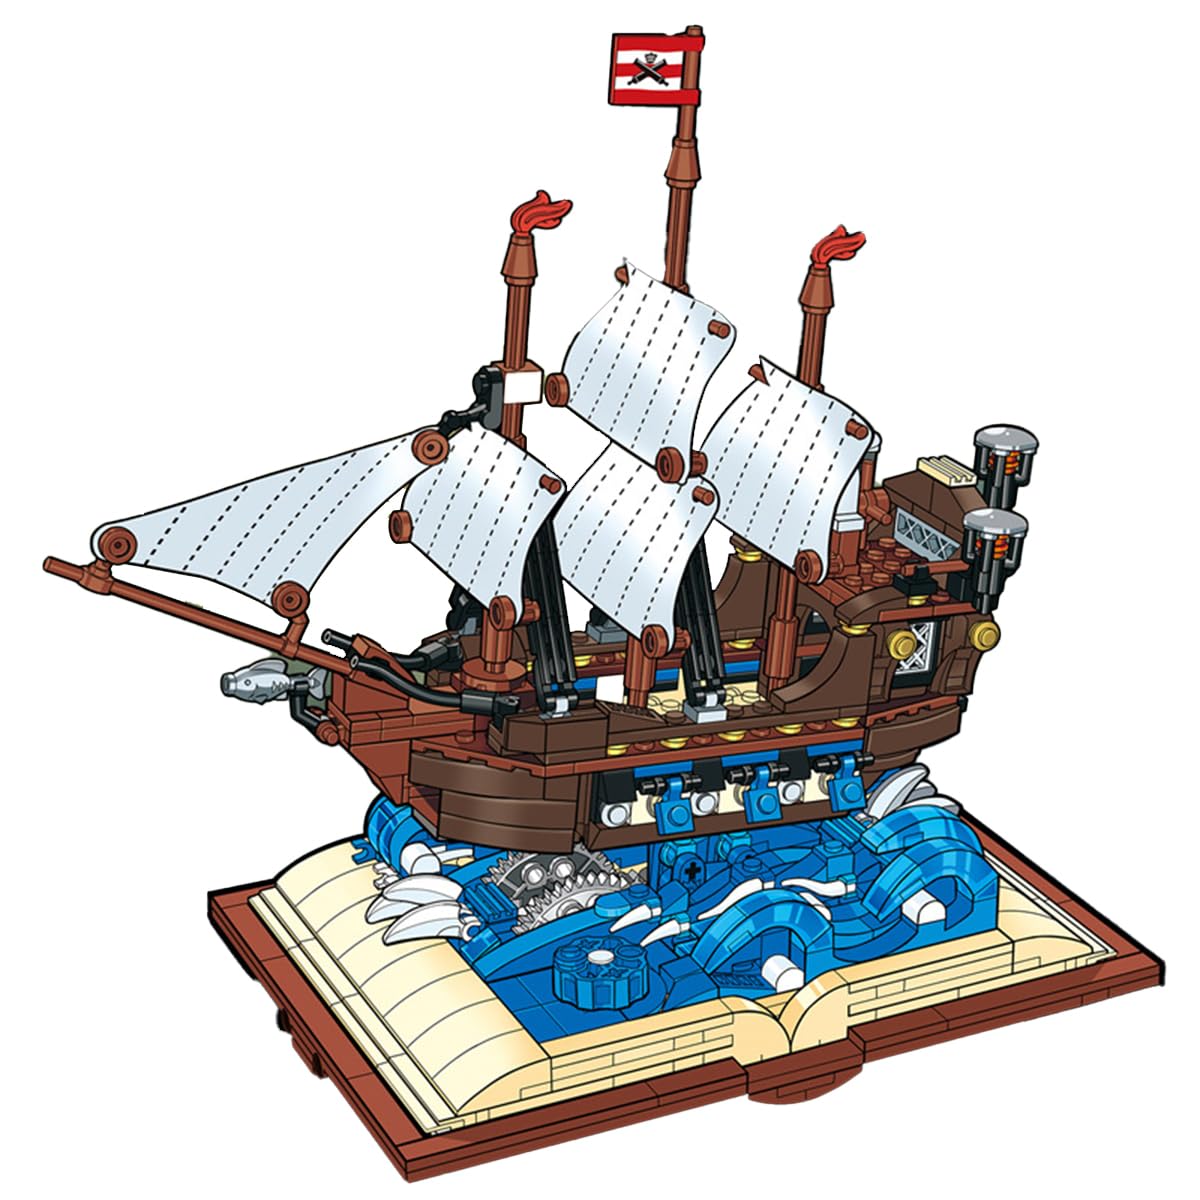 DAHONPA Grimoire Series Imperial Battleship Ship Building Blocks Set with 925 Pieces